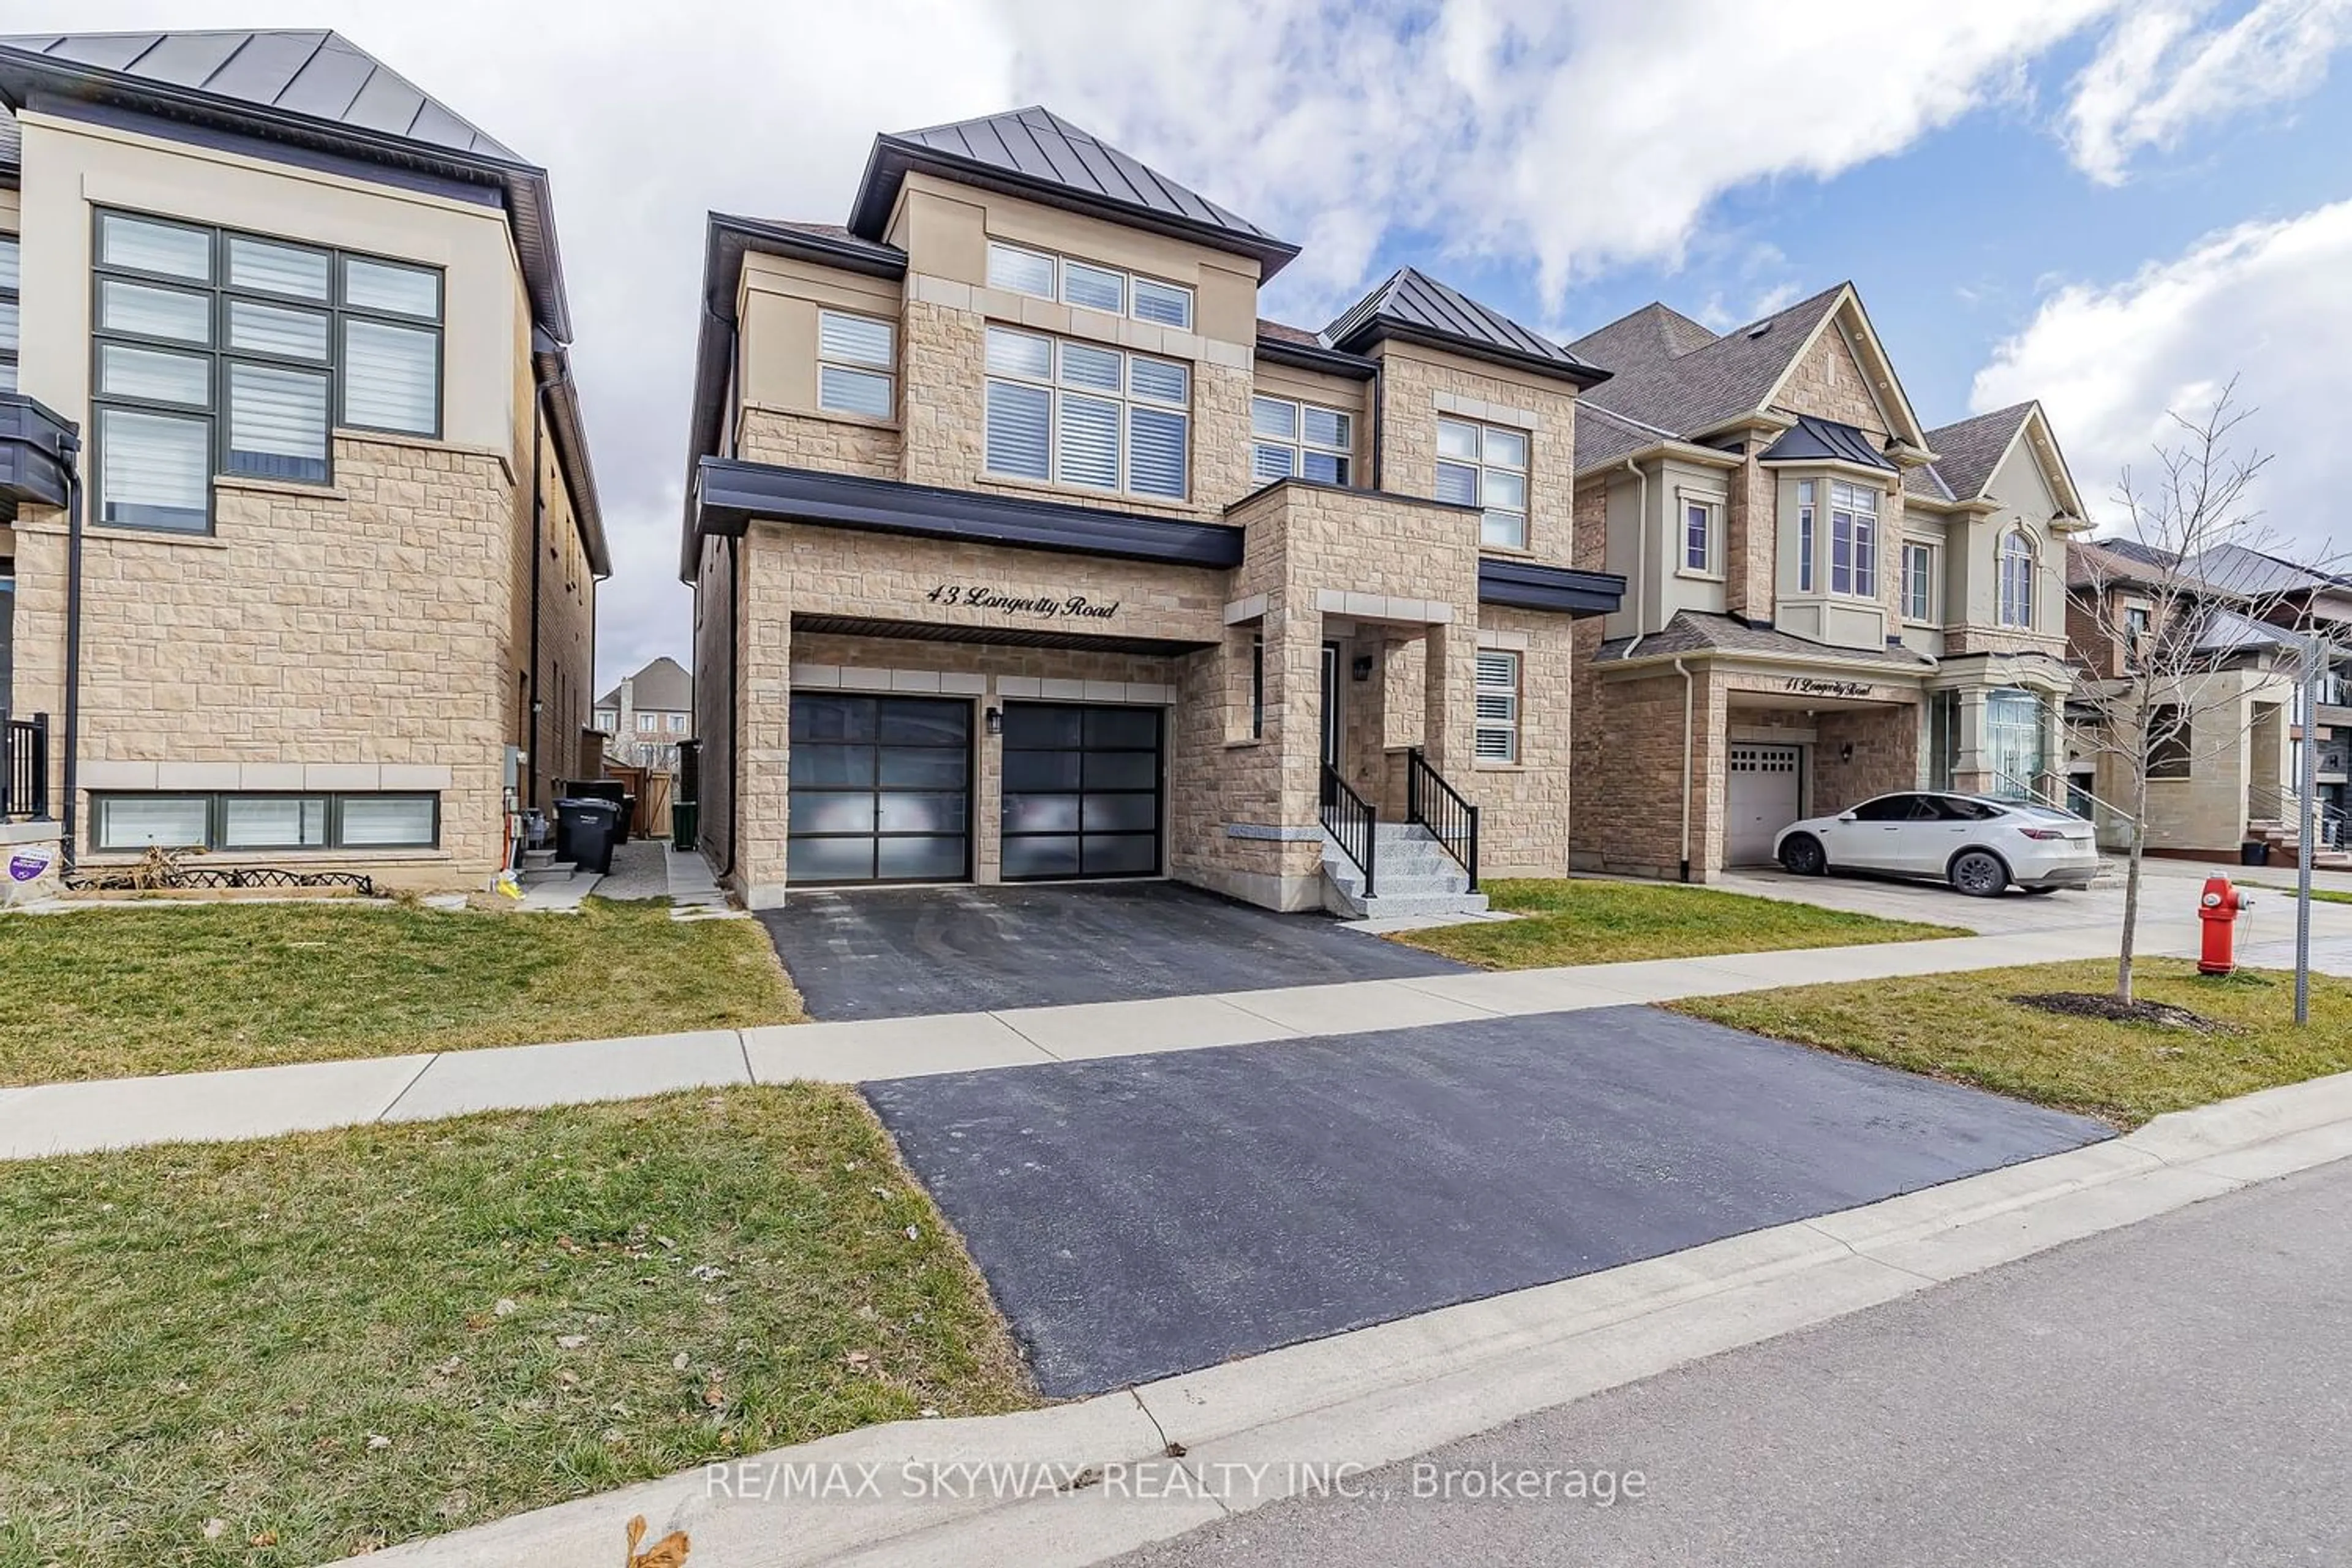 Home with brick exterior material for 43 Longevity Rd, Brampton Ontario L6X 5P3